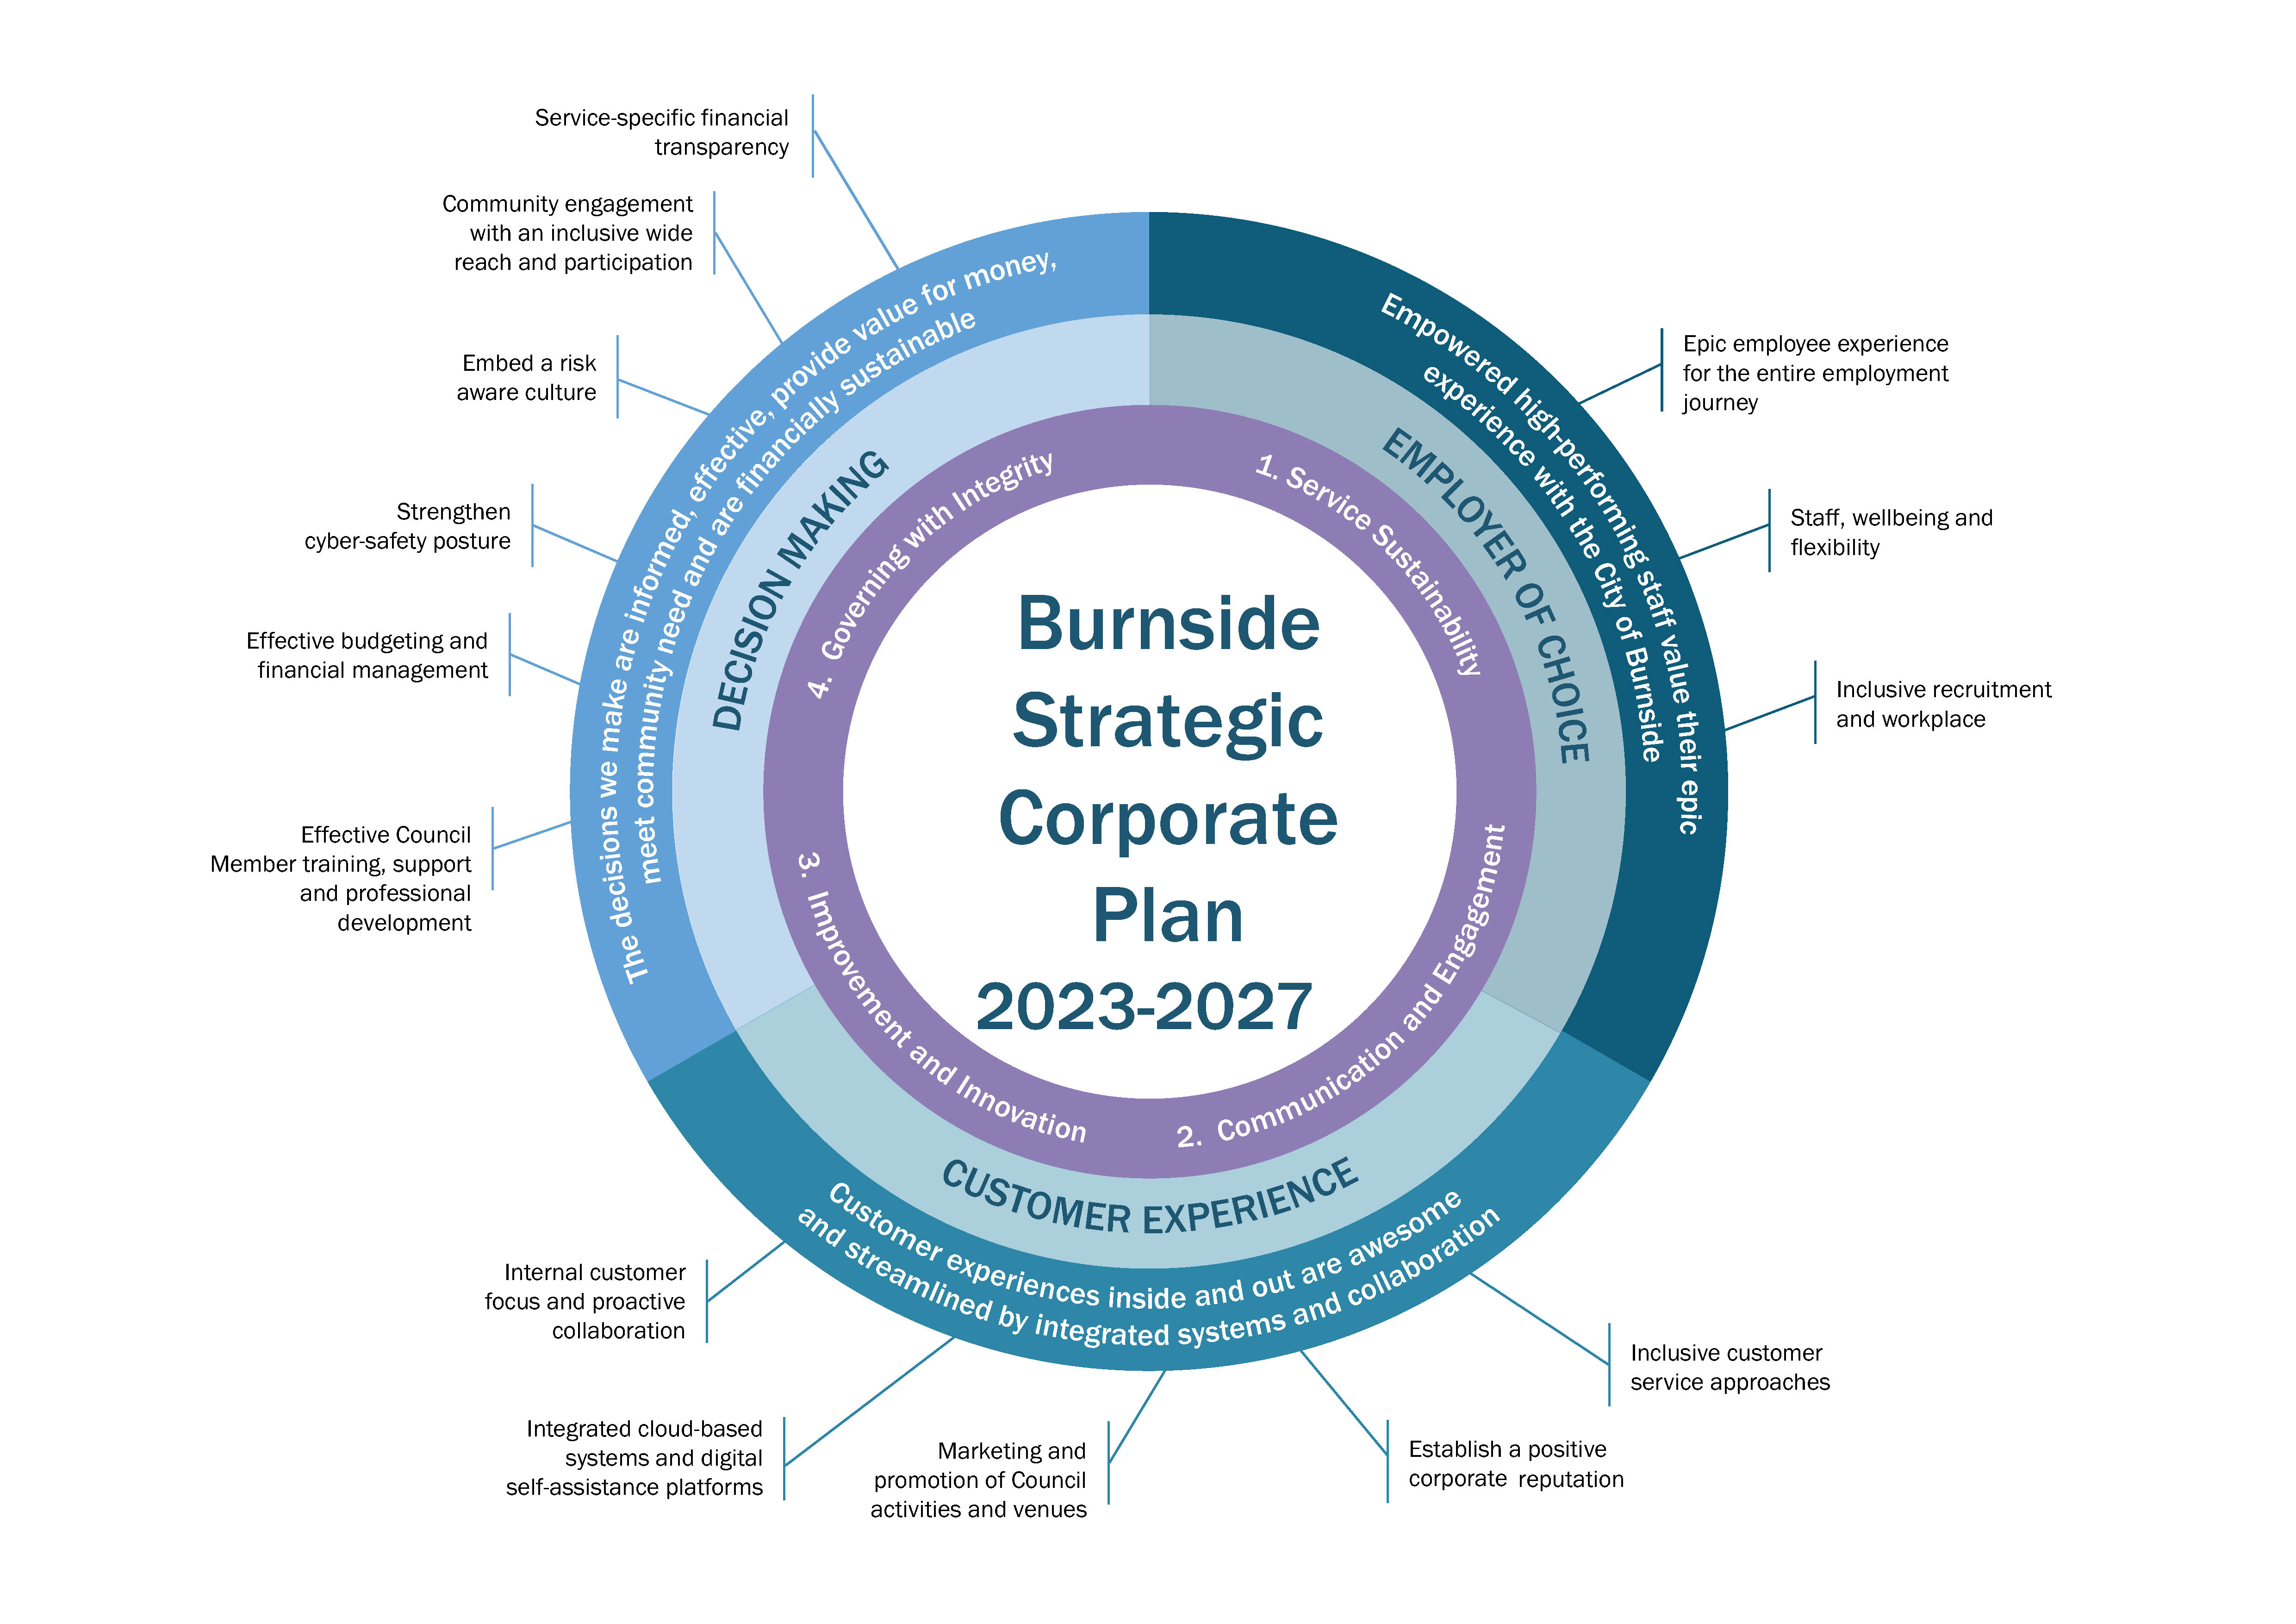 Burnside Strategic Corporate Plan